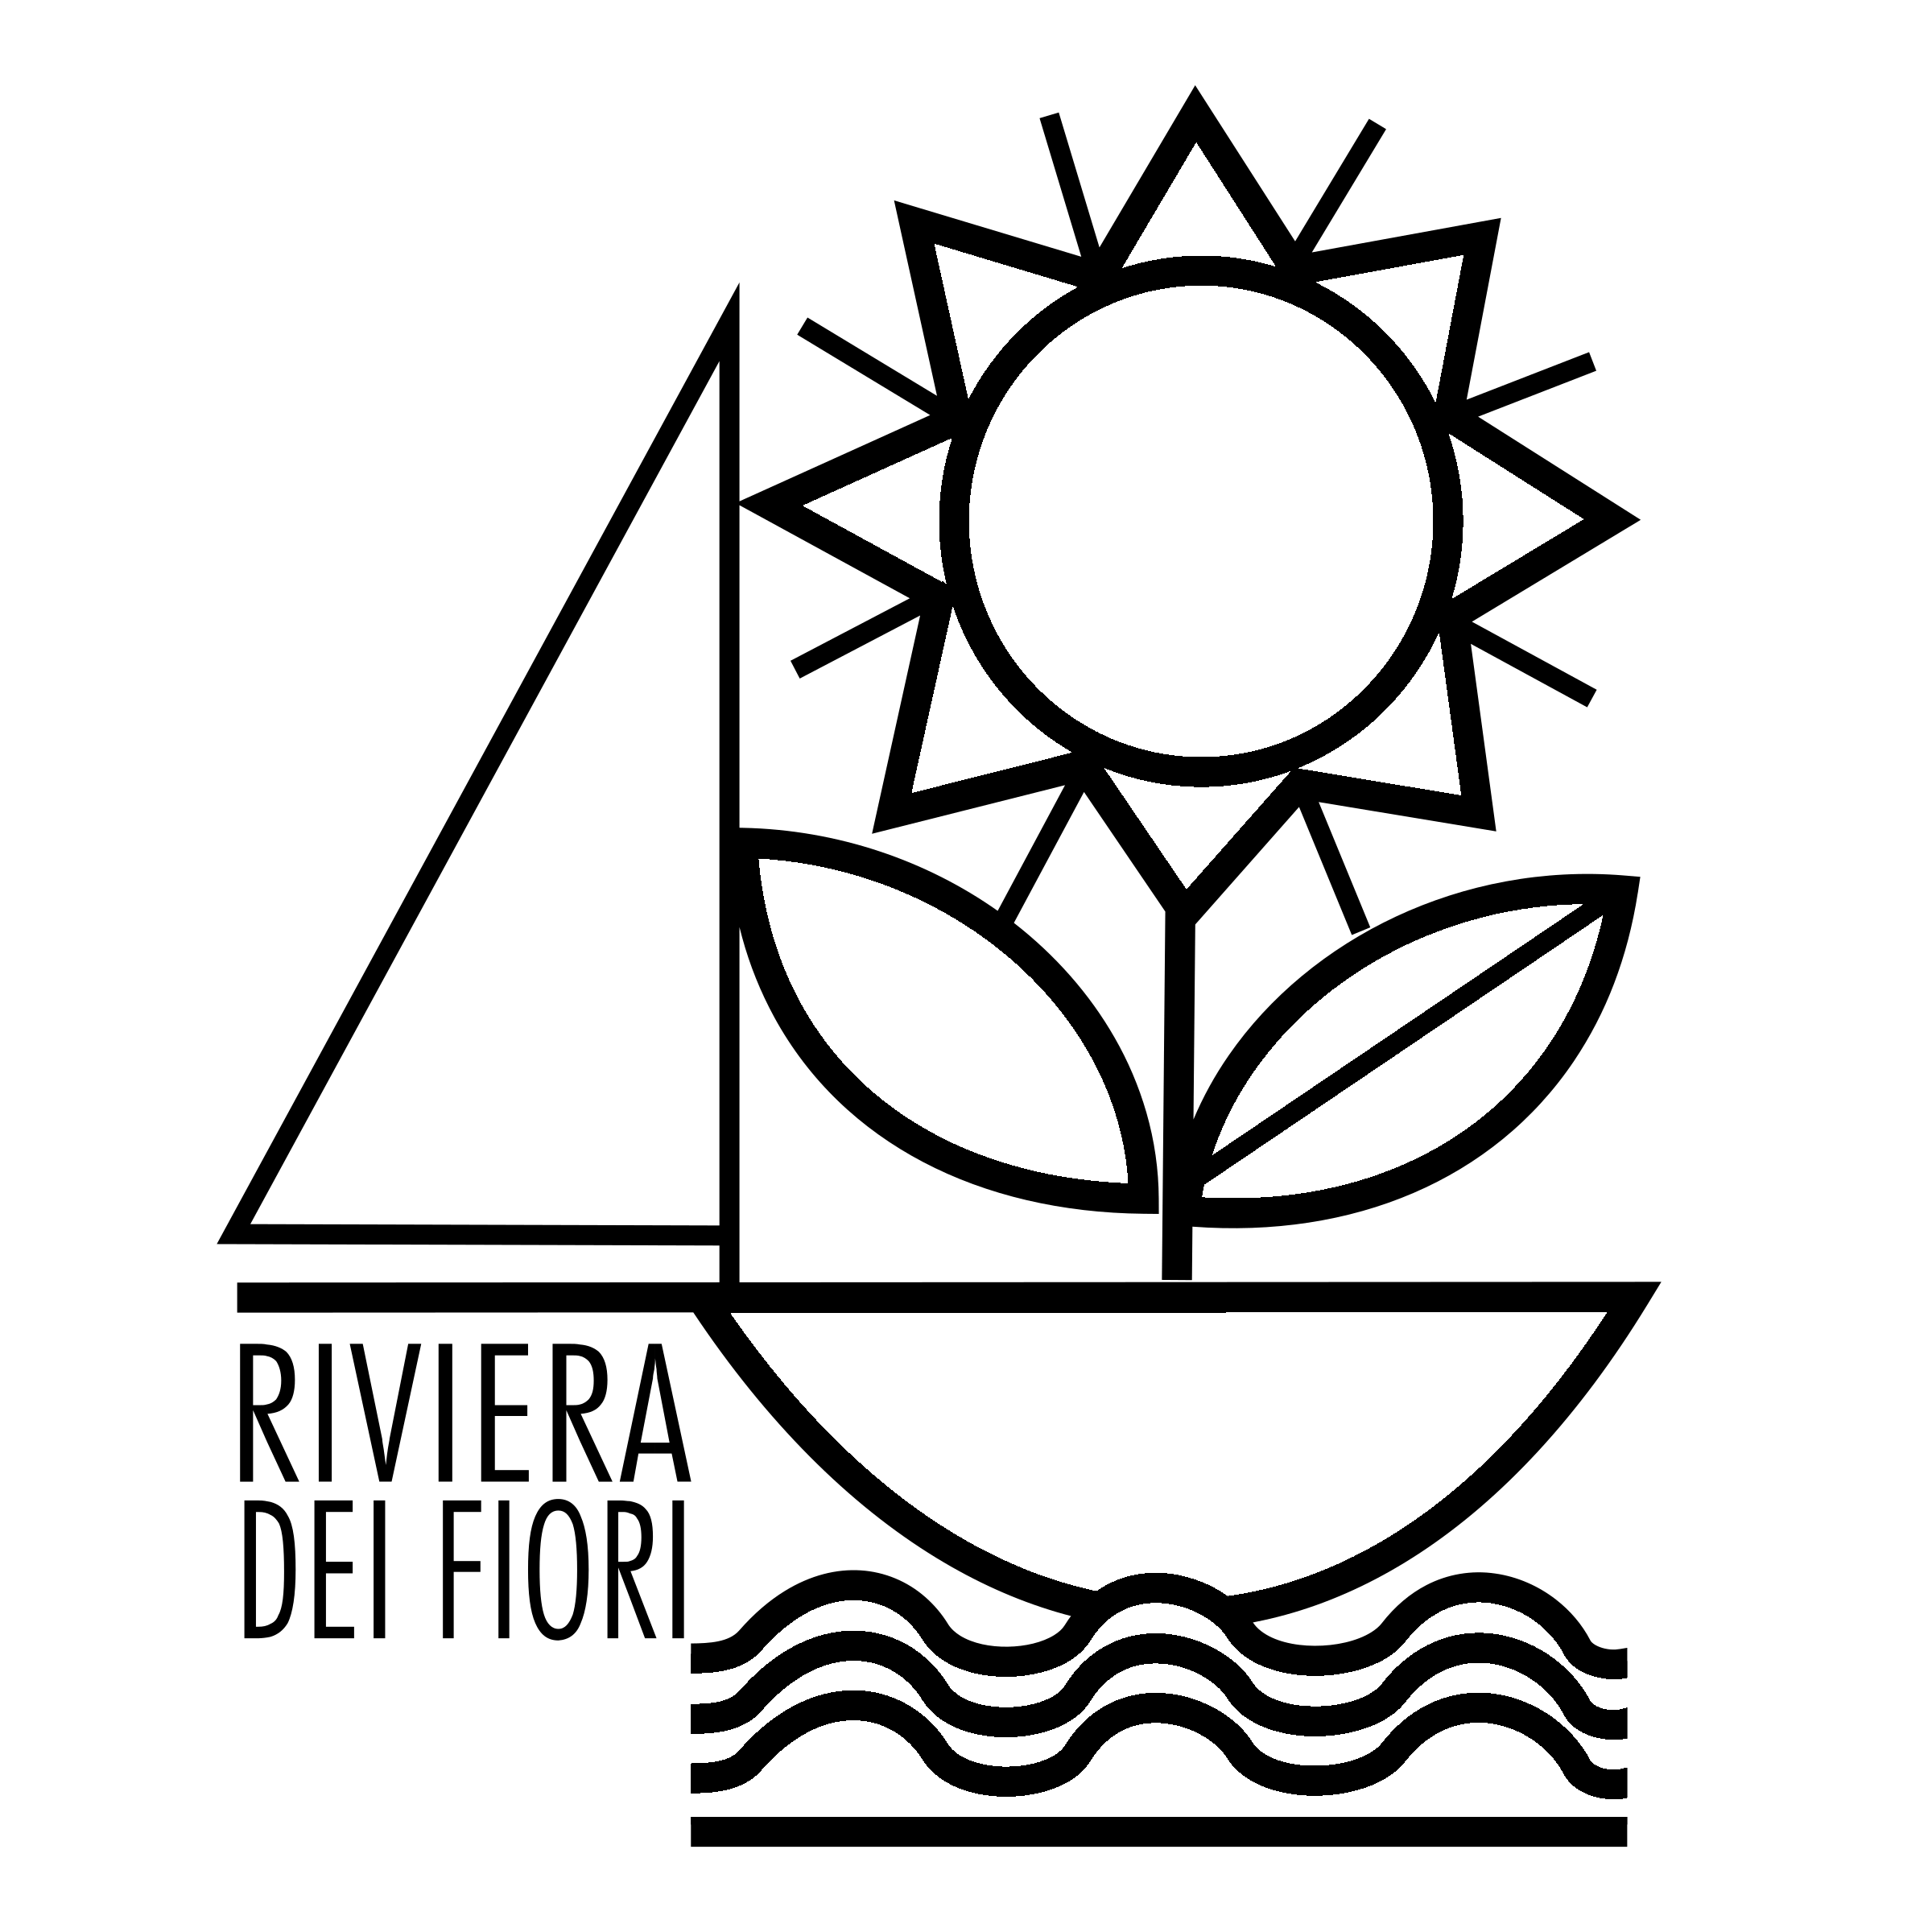 Fiori Logo - Riviera Dei Fiori Logo PNG Transparent & SVG Vector - Freebie Supply